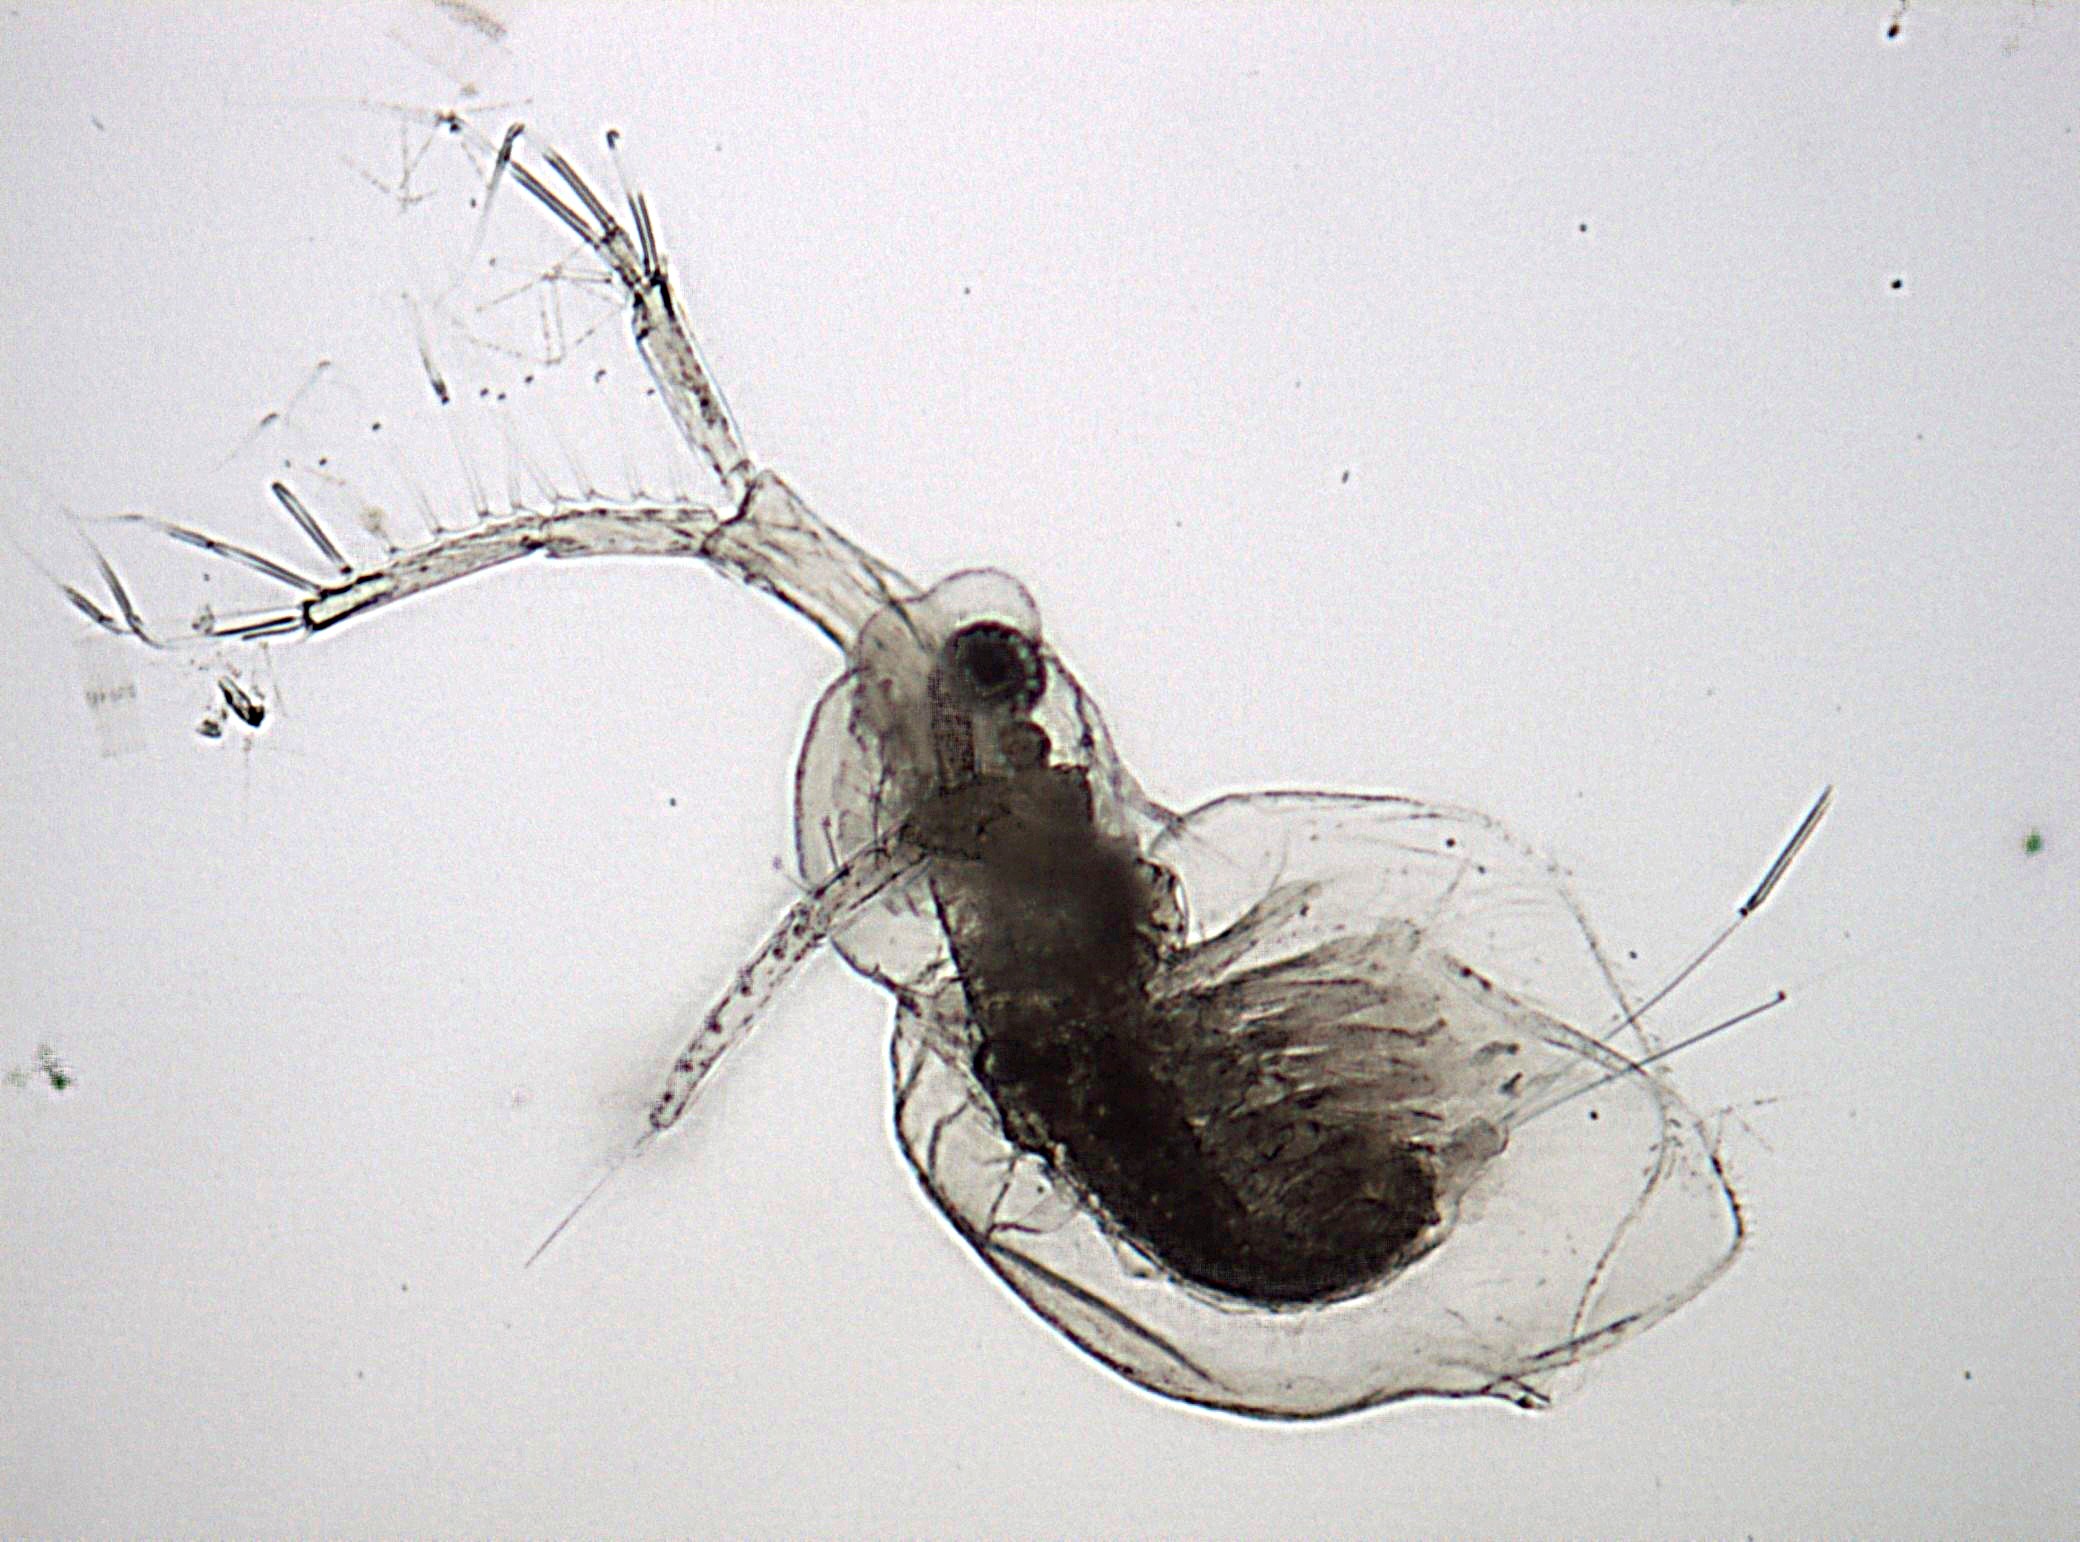 Mikroskopische Aufnahme des Zooplanktons Diaphanosoma brachyurum